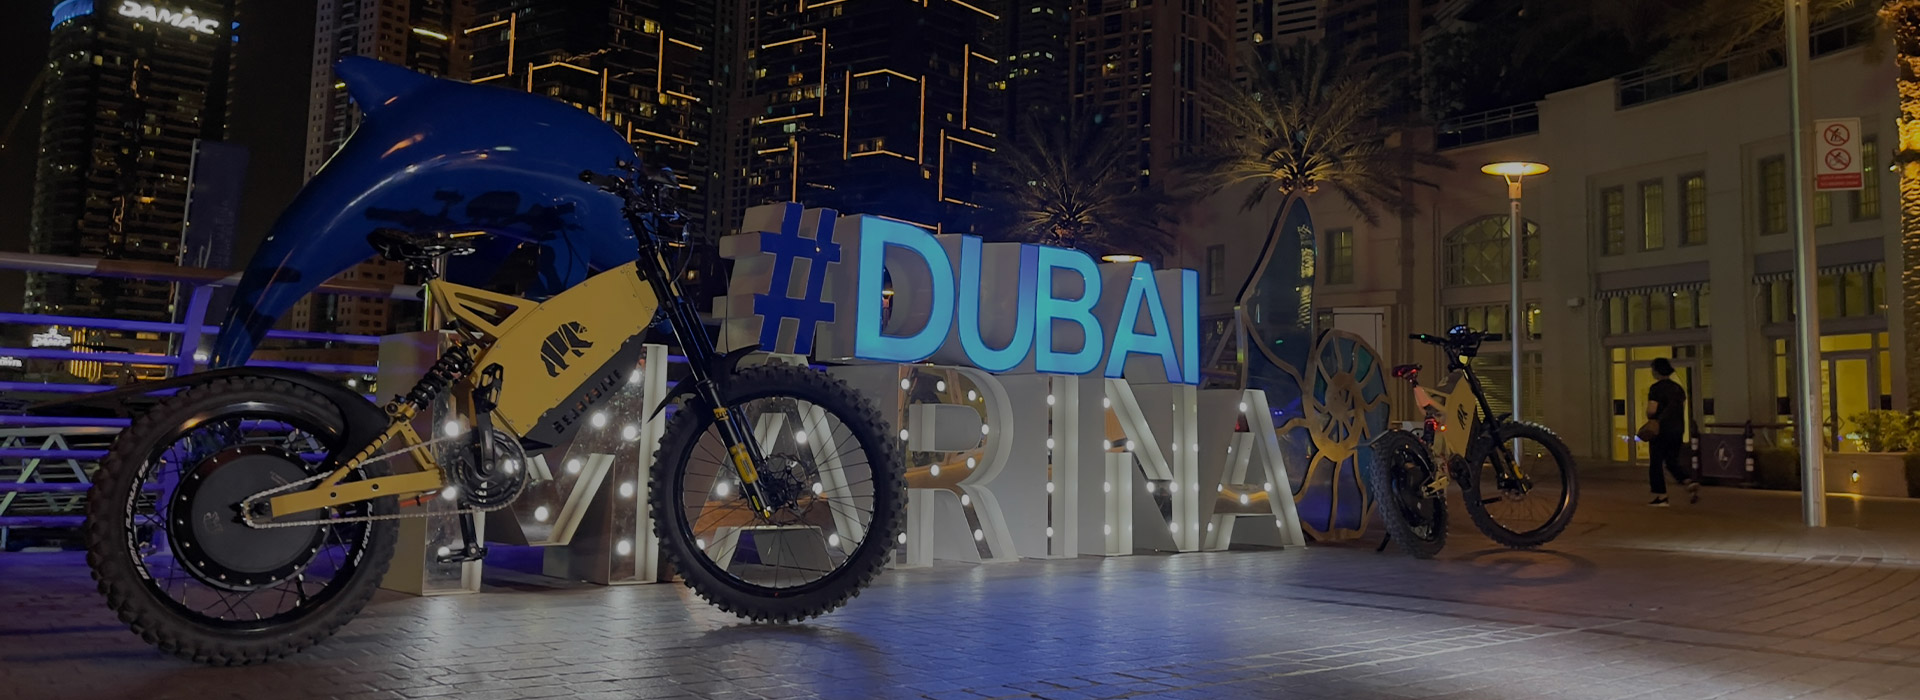 Odkryj Dubaj<br />z BearEbike